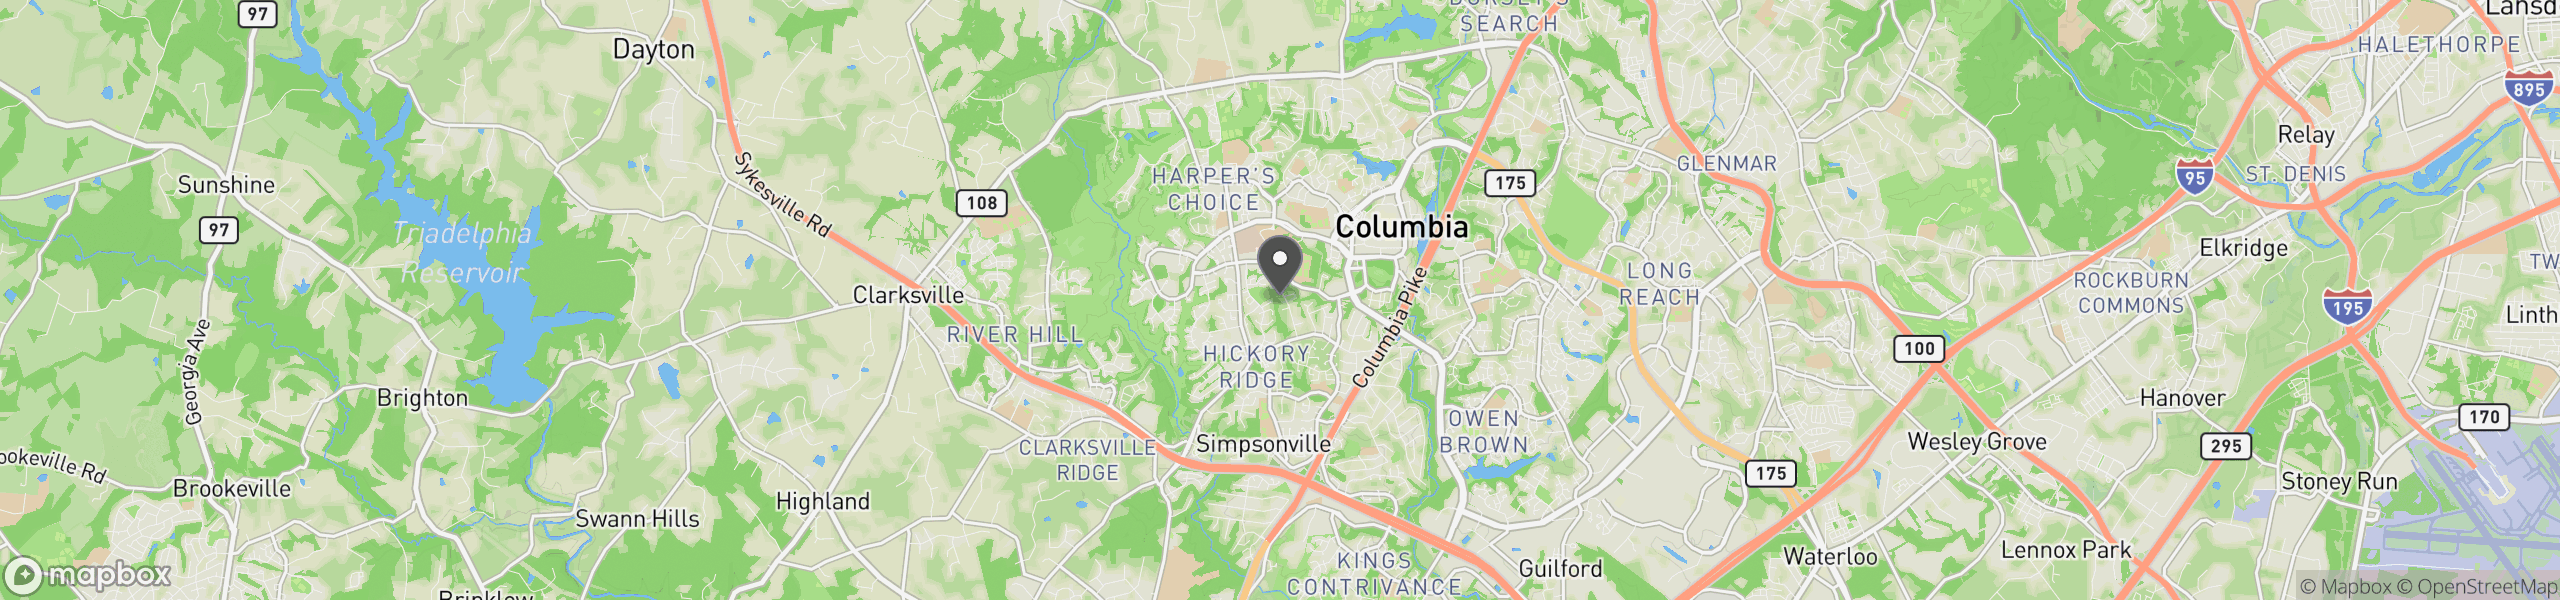 Columbia, MD 21044